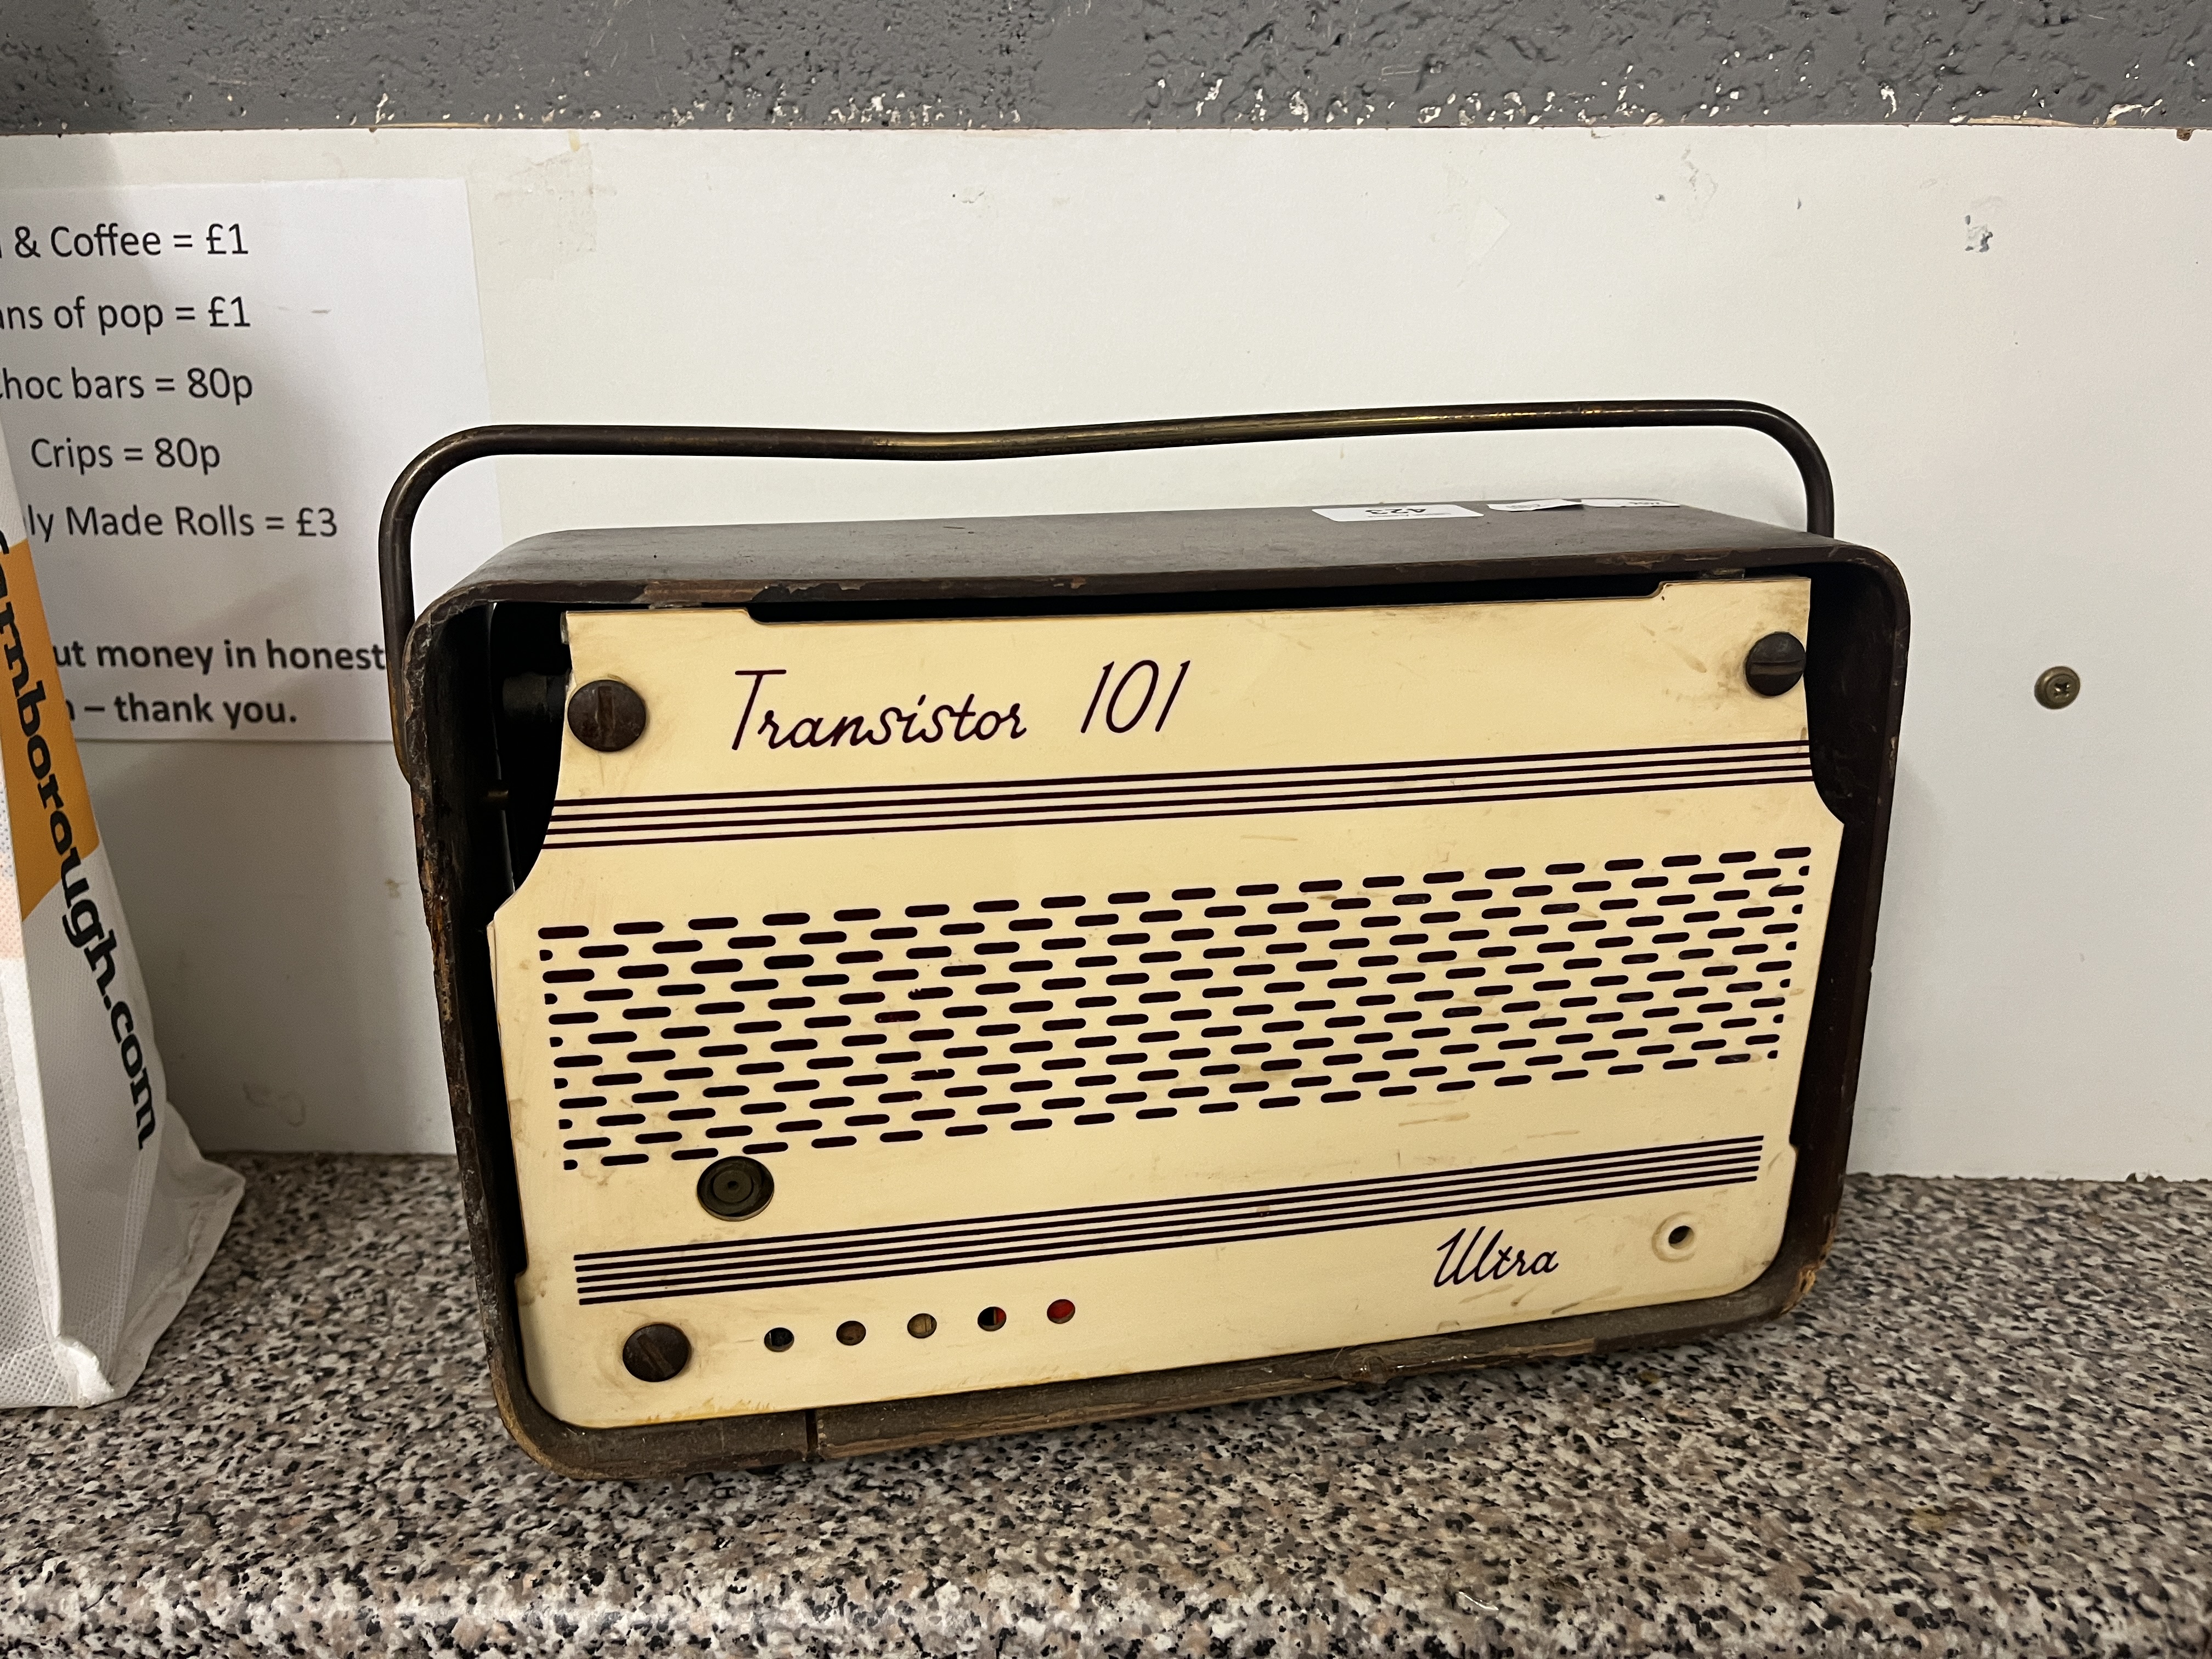 Vintage transistor radio - Ultra transistor 101 - Image 2 of 2